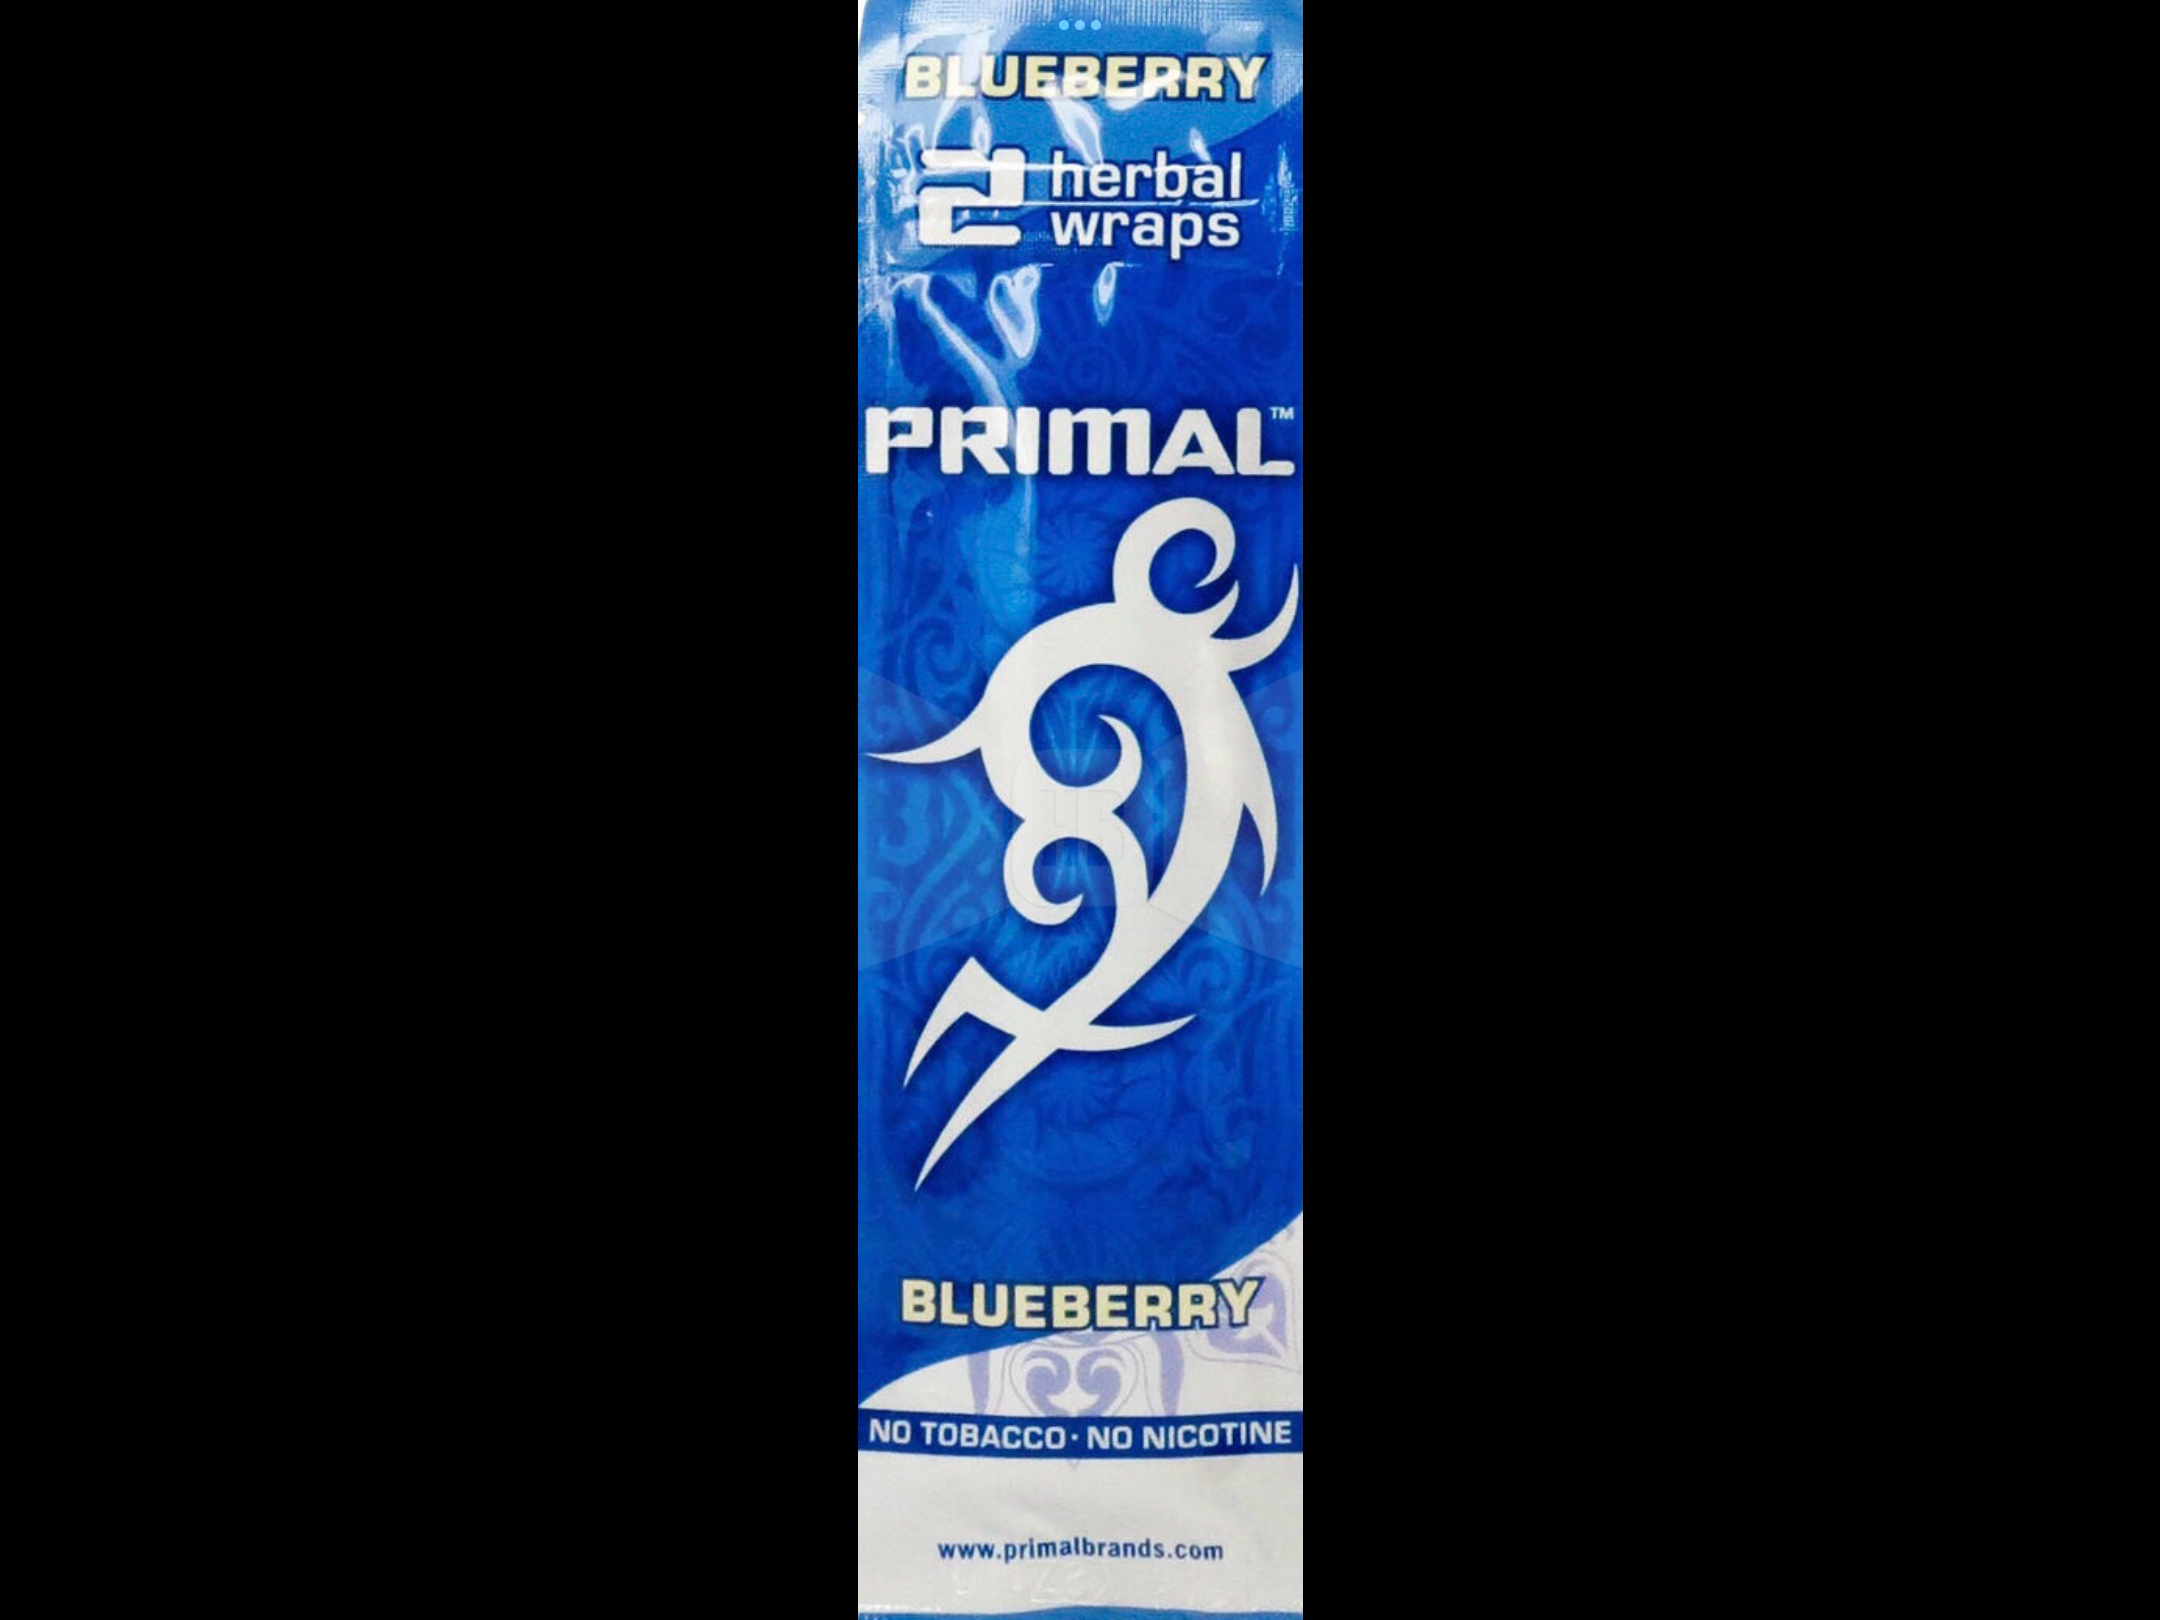 PRIMAL Herbal Wraps